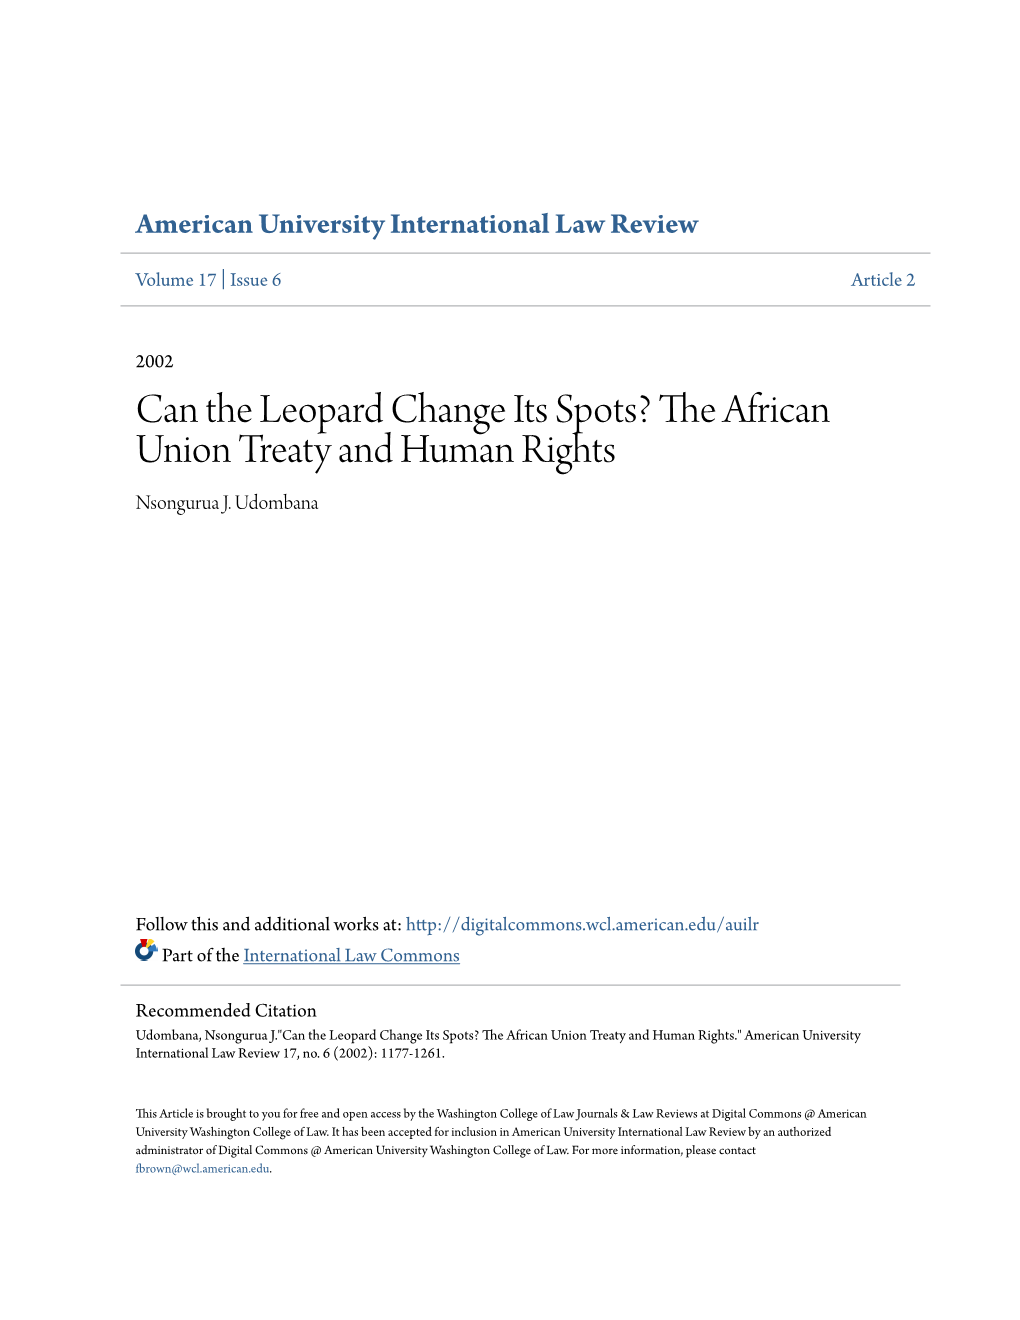 The African Union Treaty and Human Rights Nsongurua J